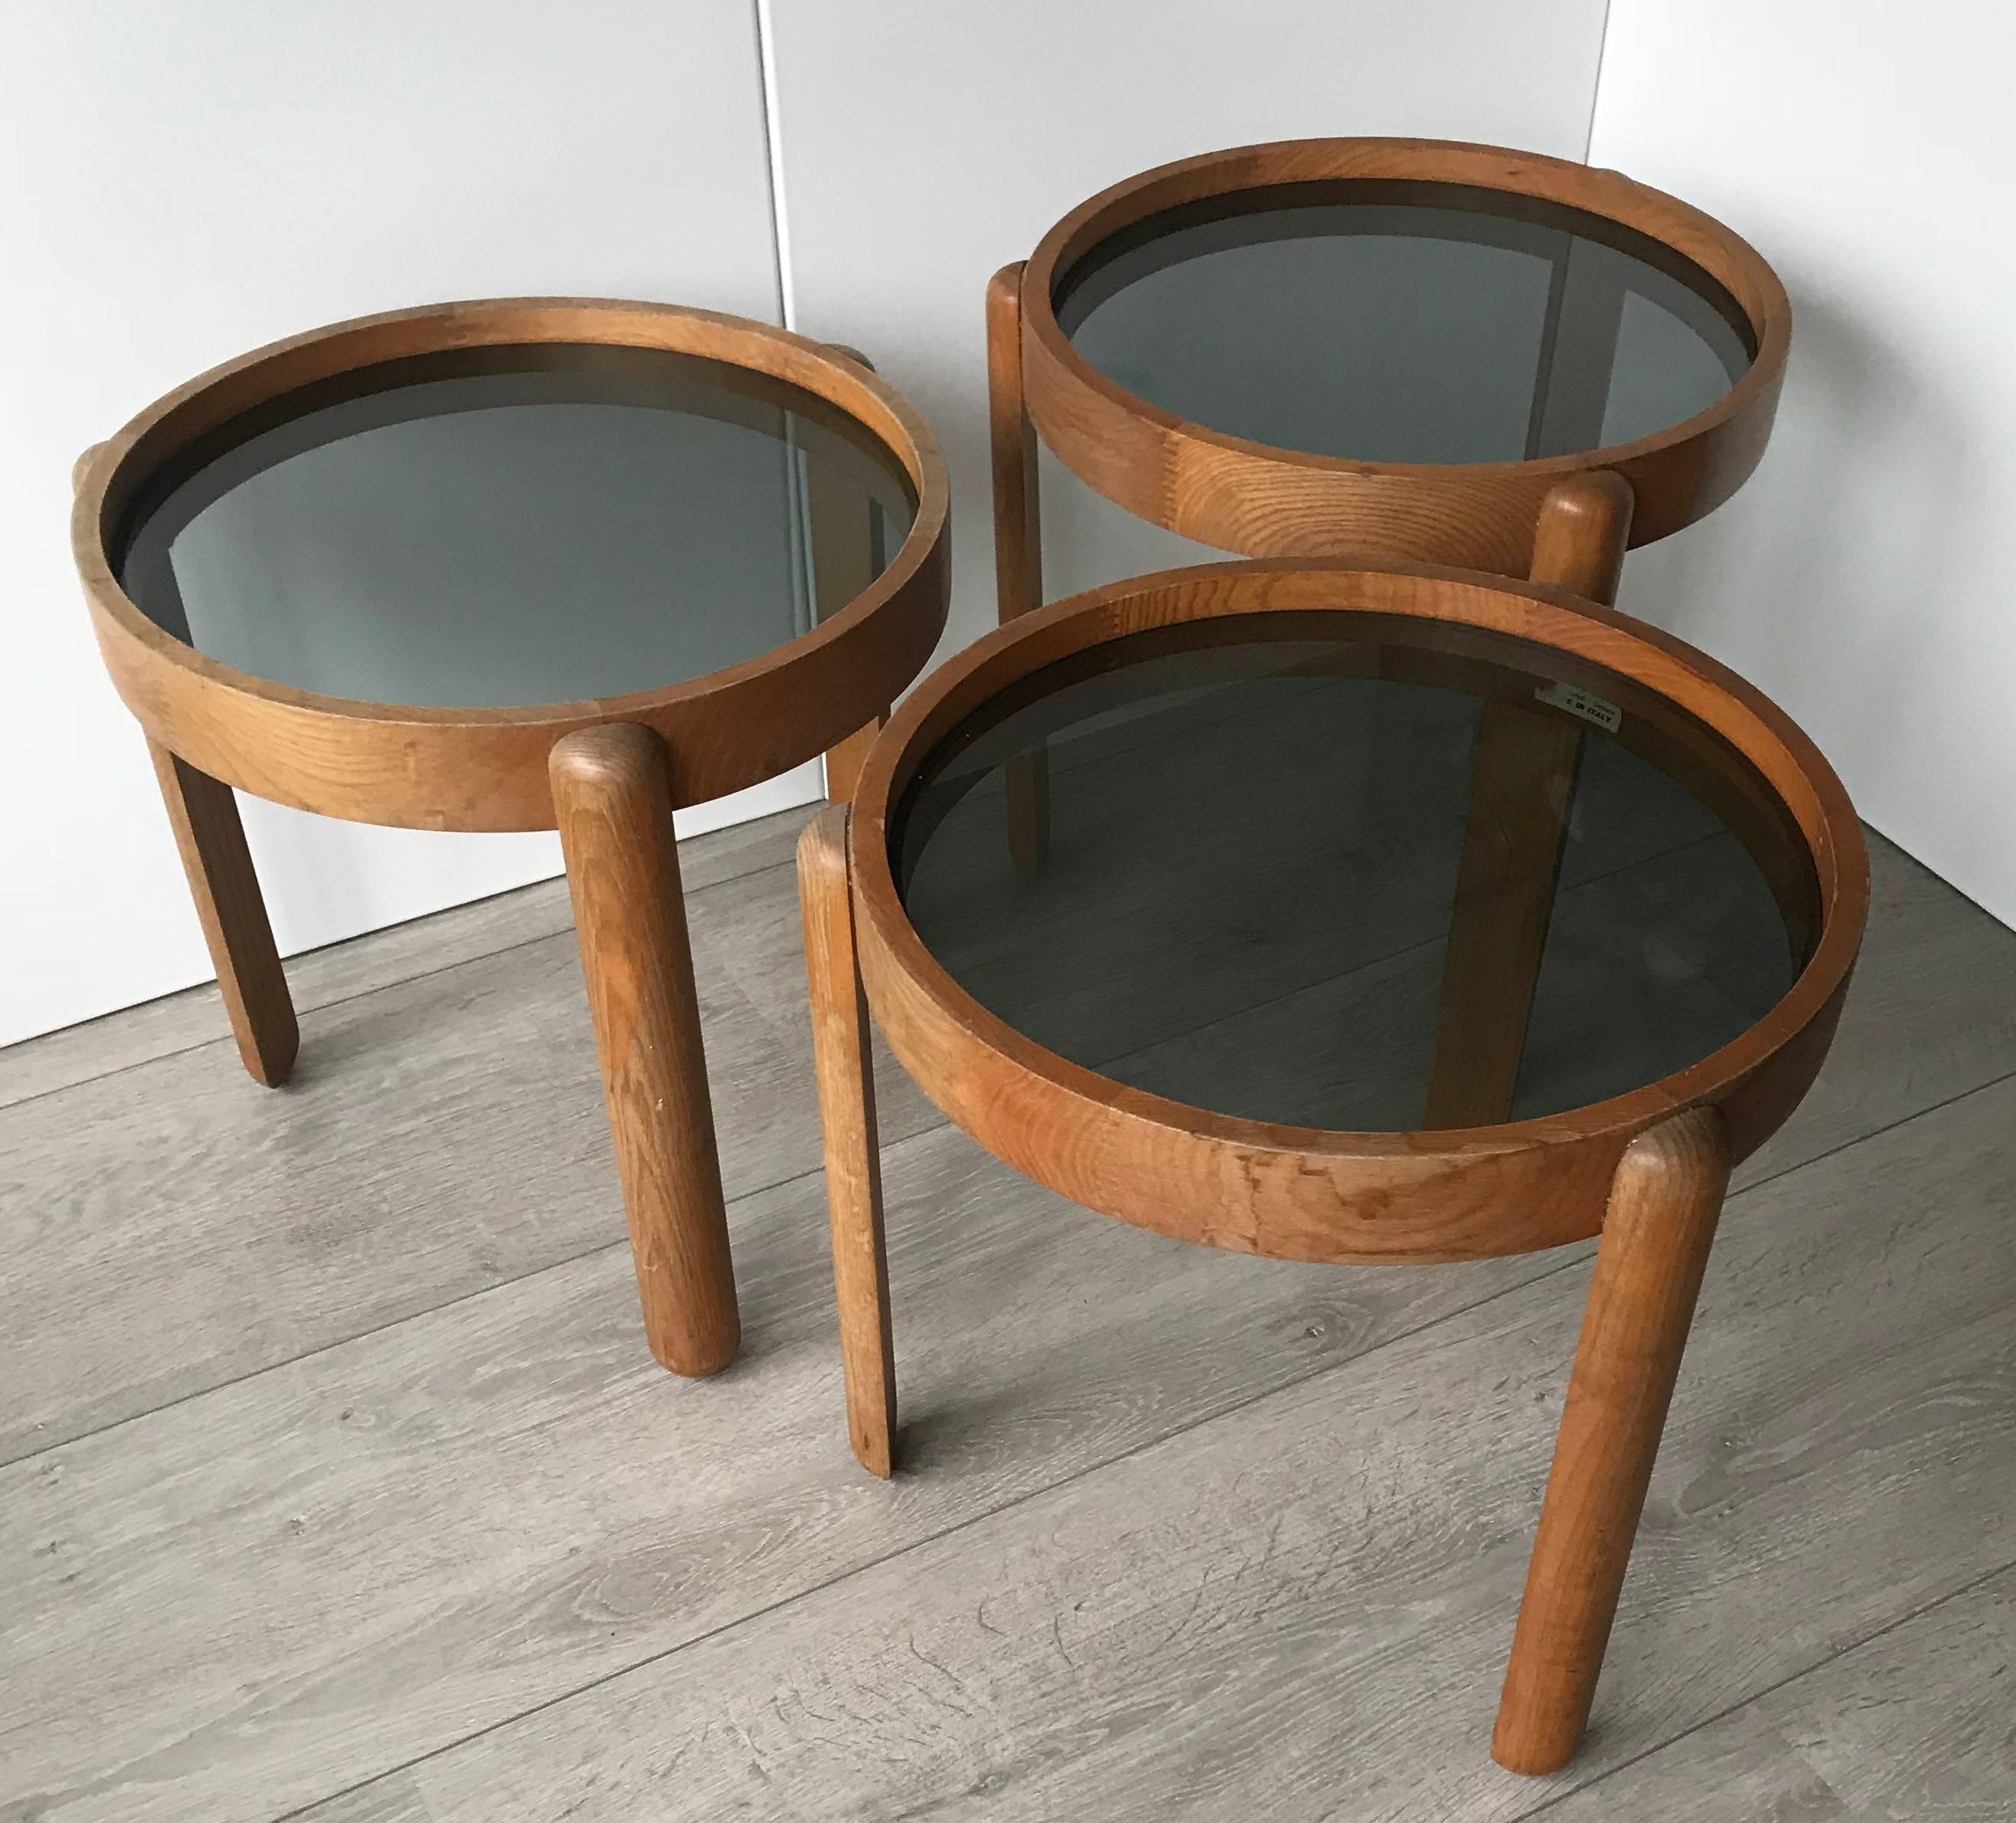 Mid-Century Modern Italian Design Circular Set of Tables by Porada Arredi Cabiate, Wood and Glass